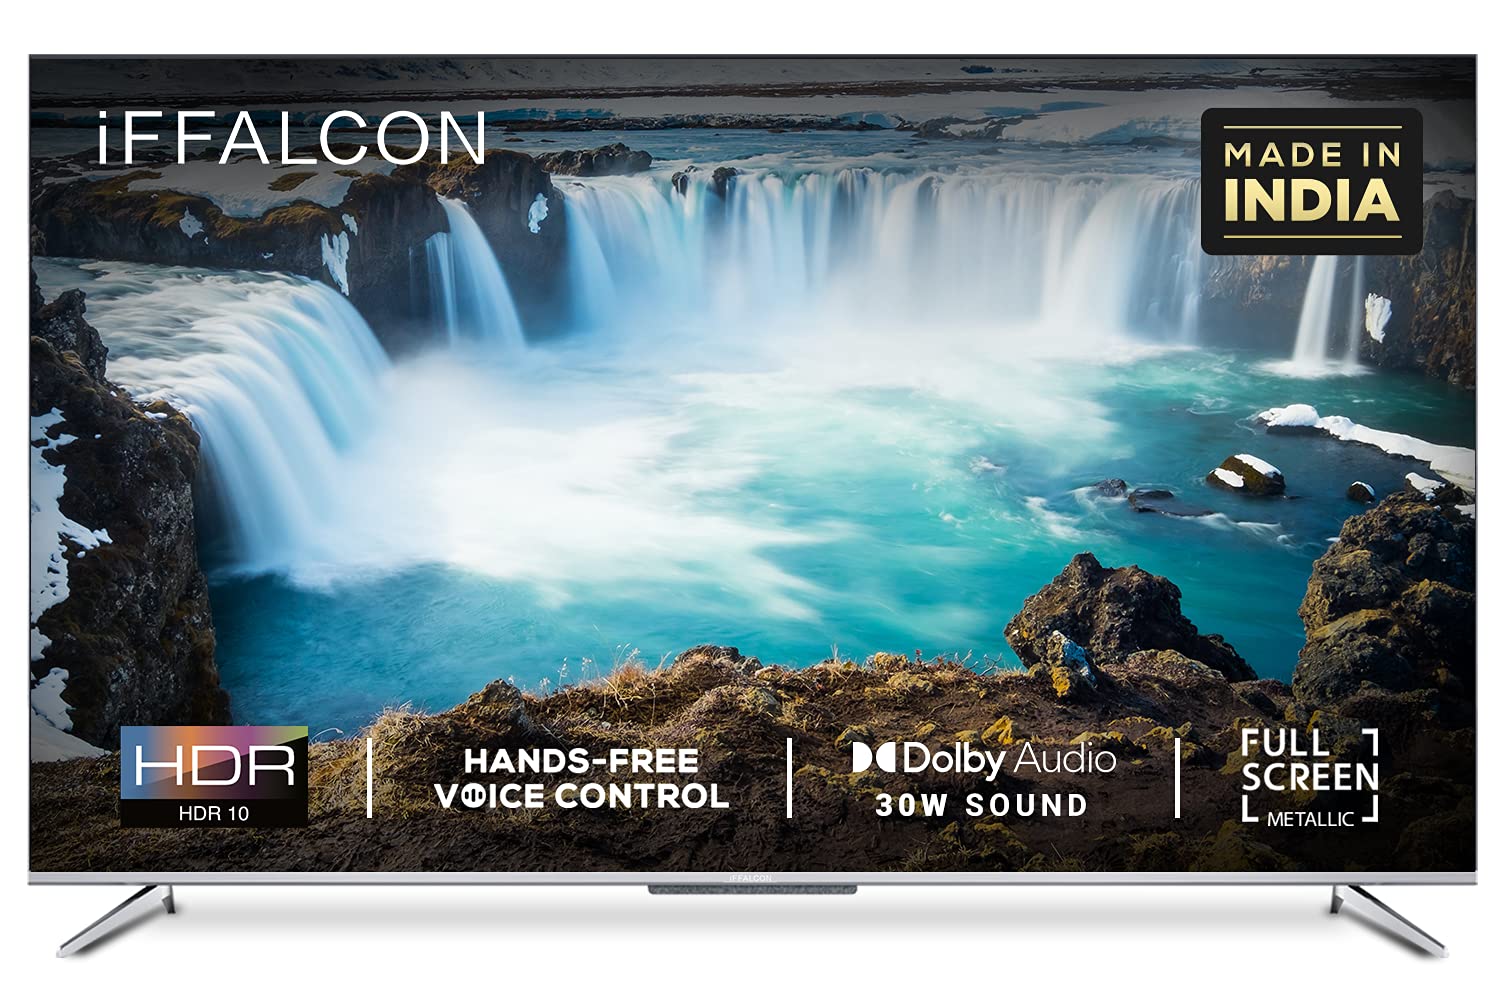 iFFALCON 139 cm Smart TV Offers